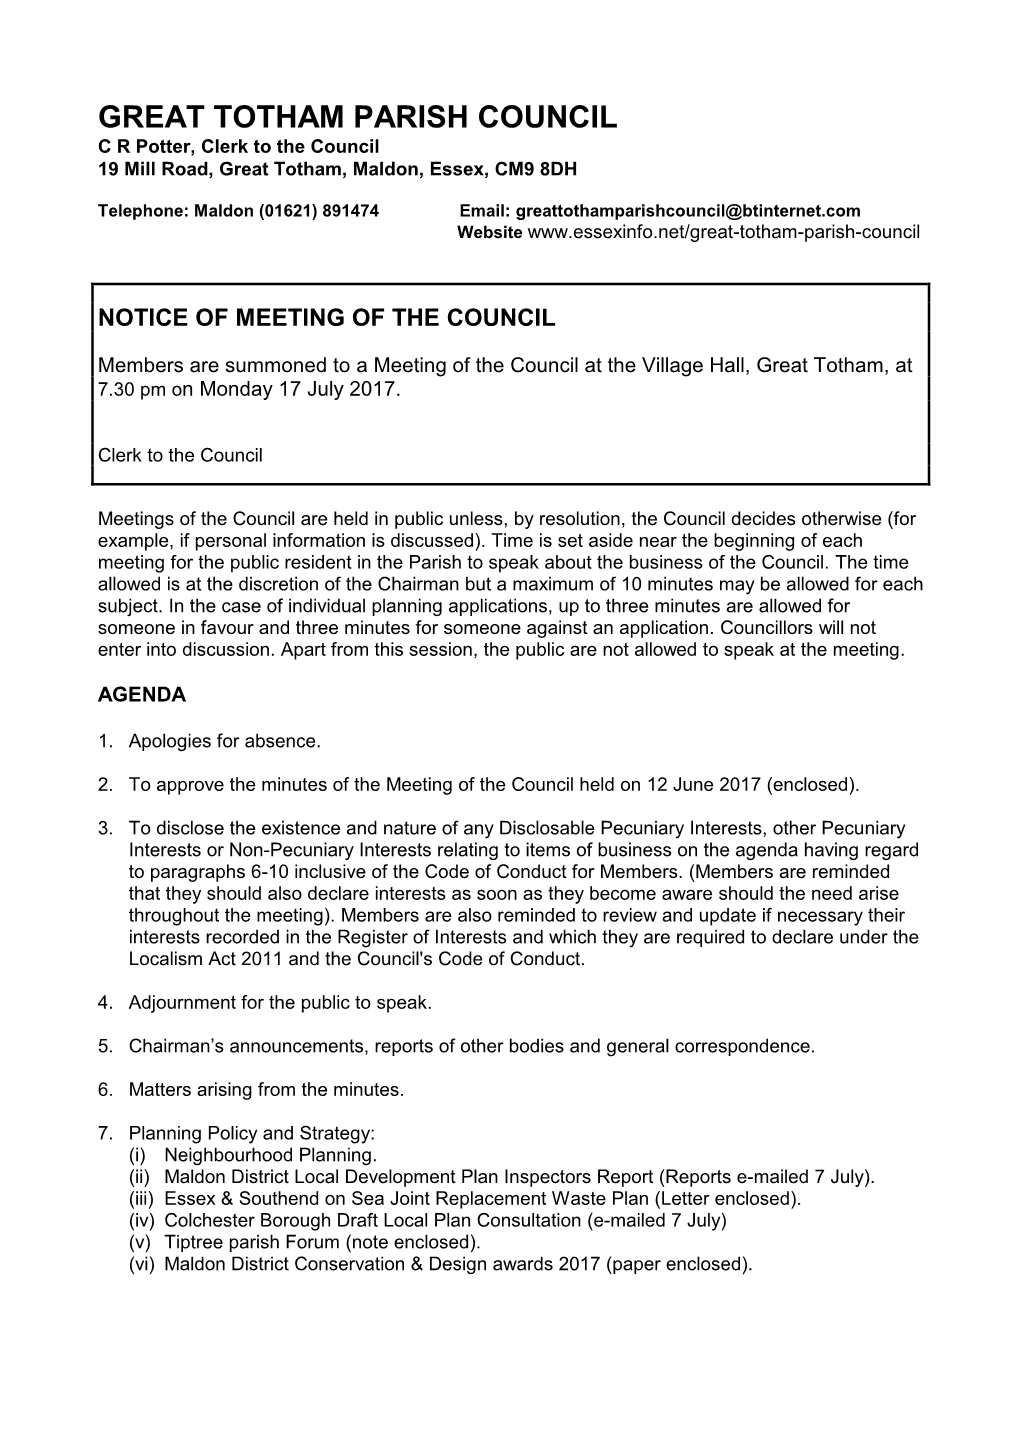 Council Agenda 07 17Th July 2017